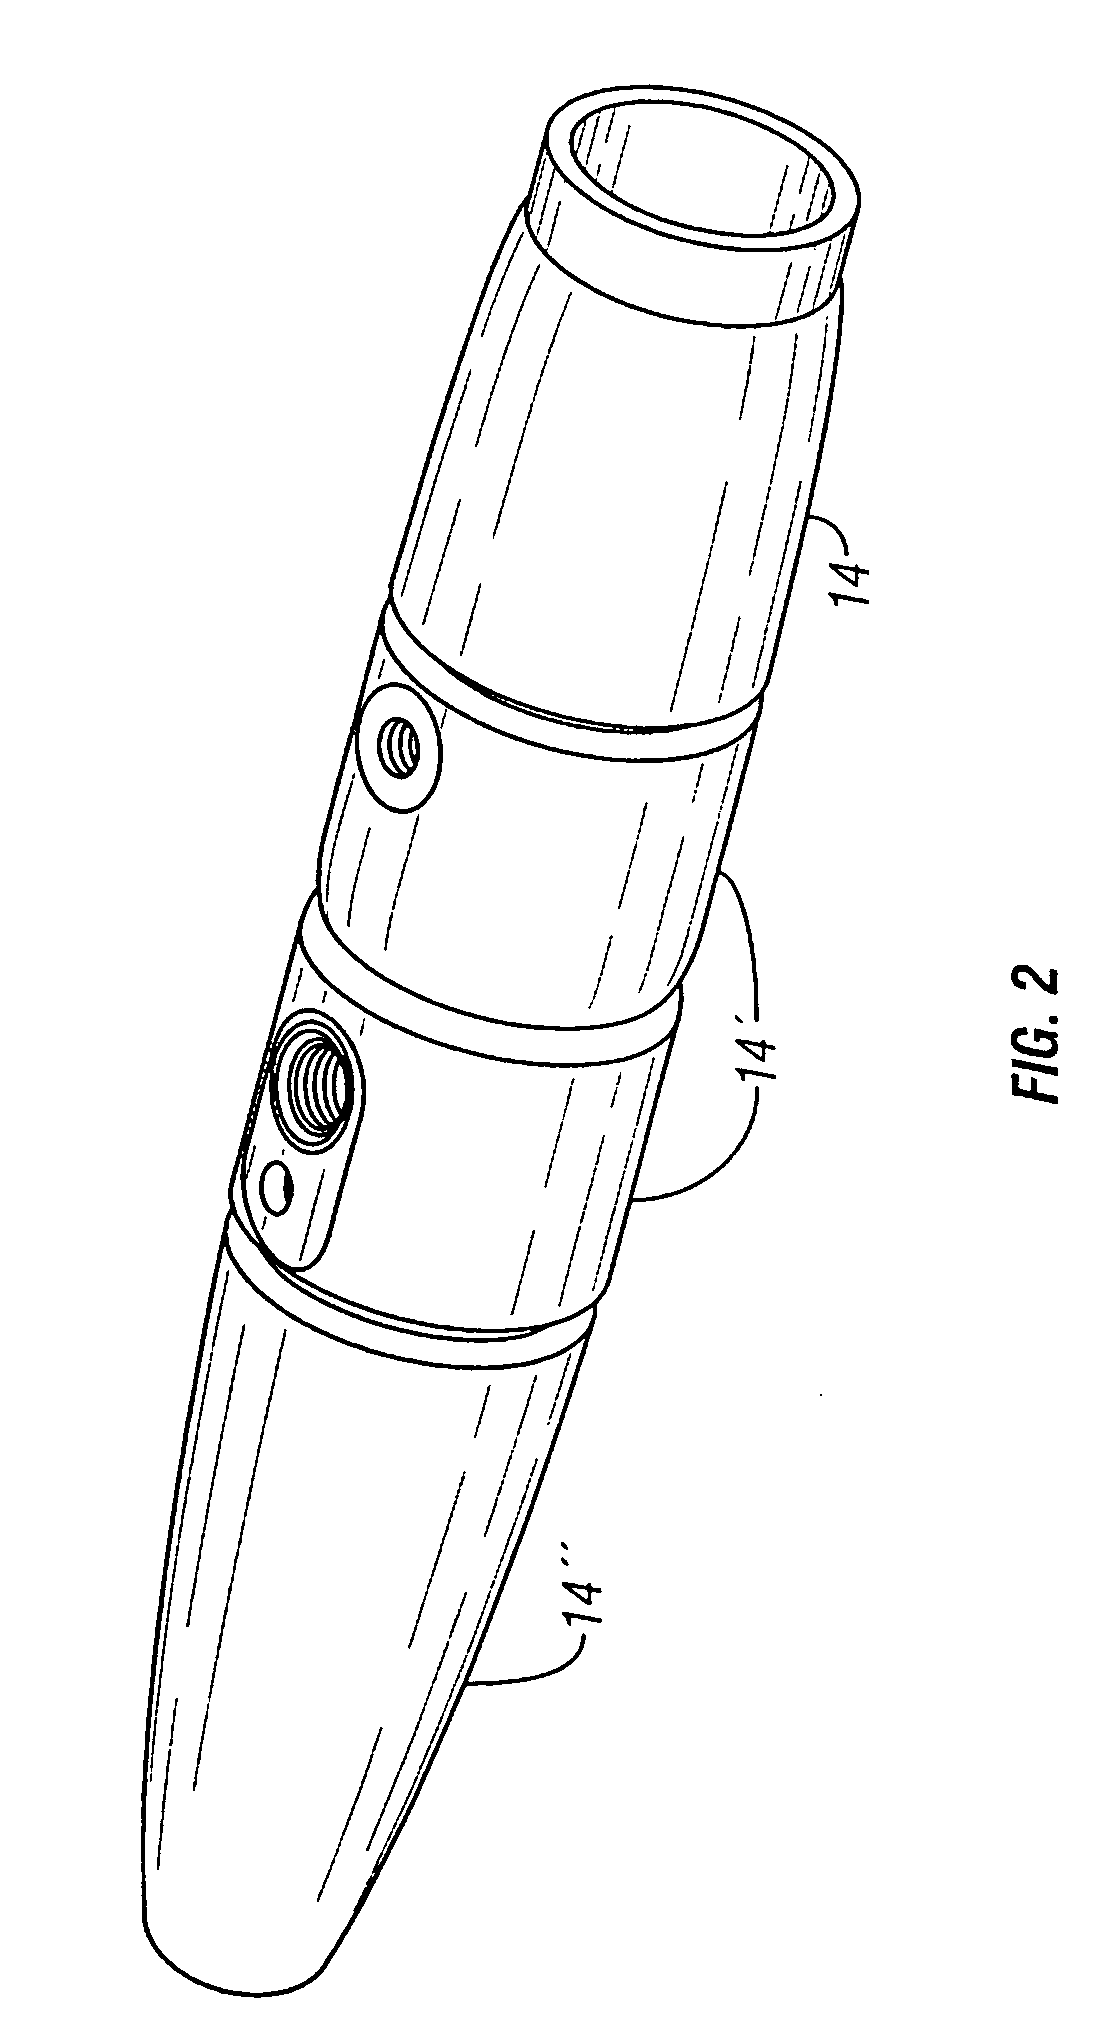 Insensitive munition design for shrouded penetrators